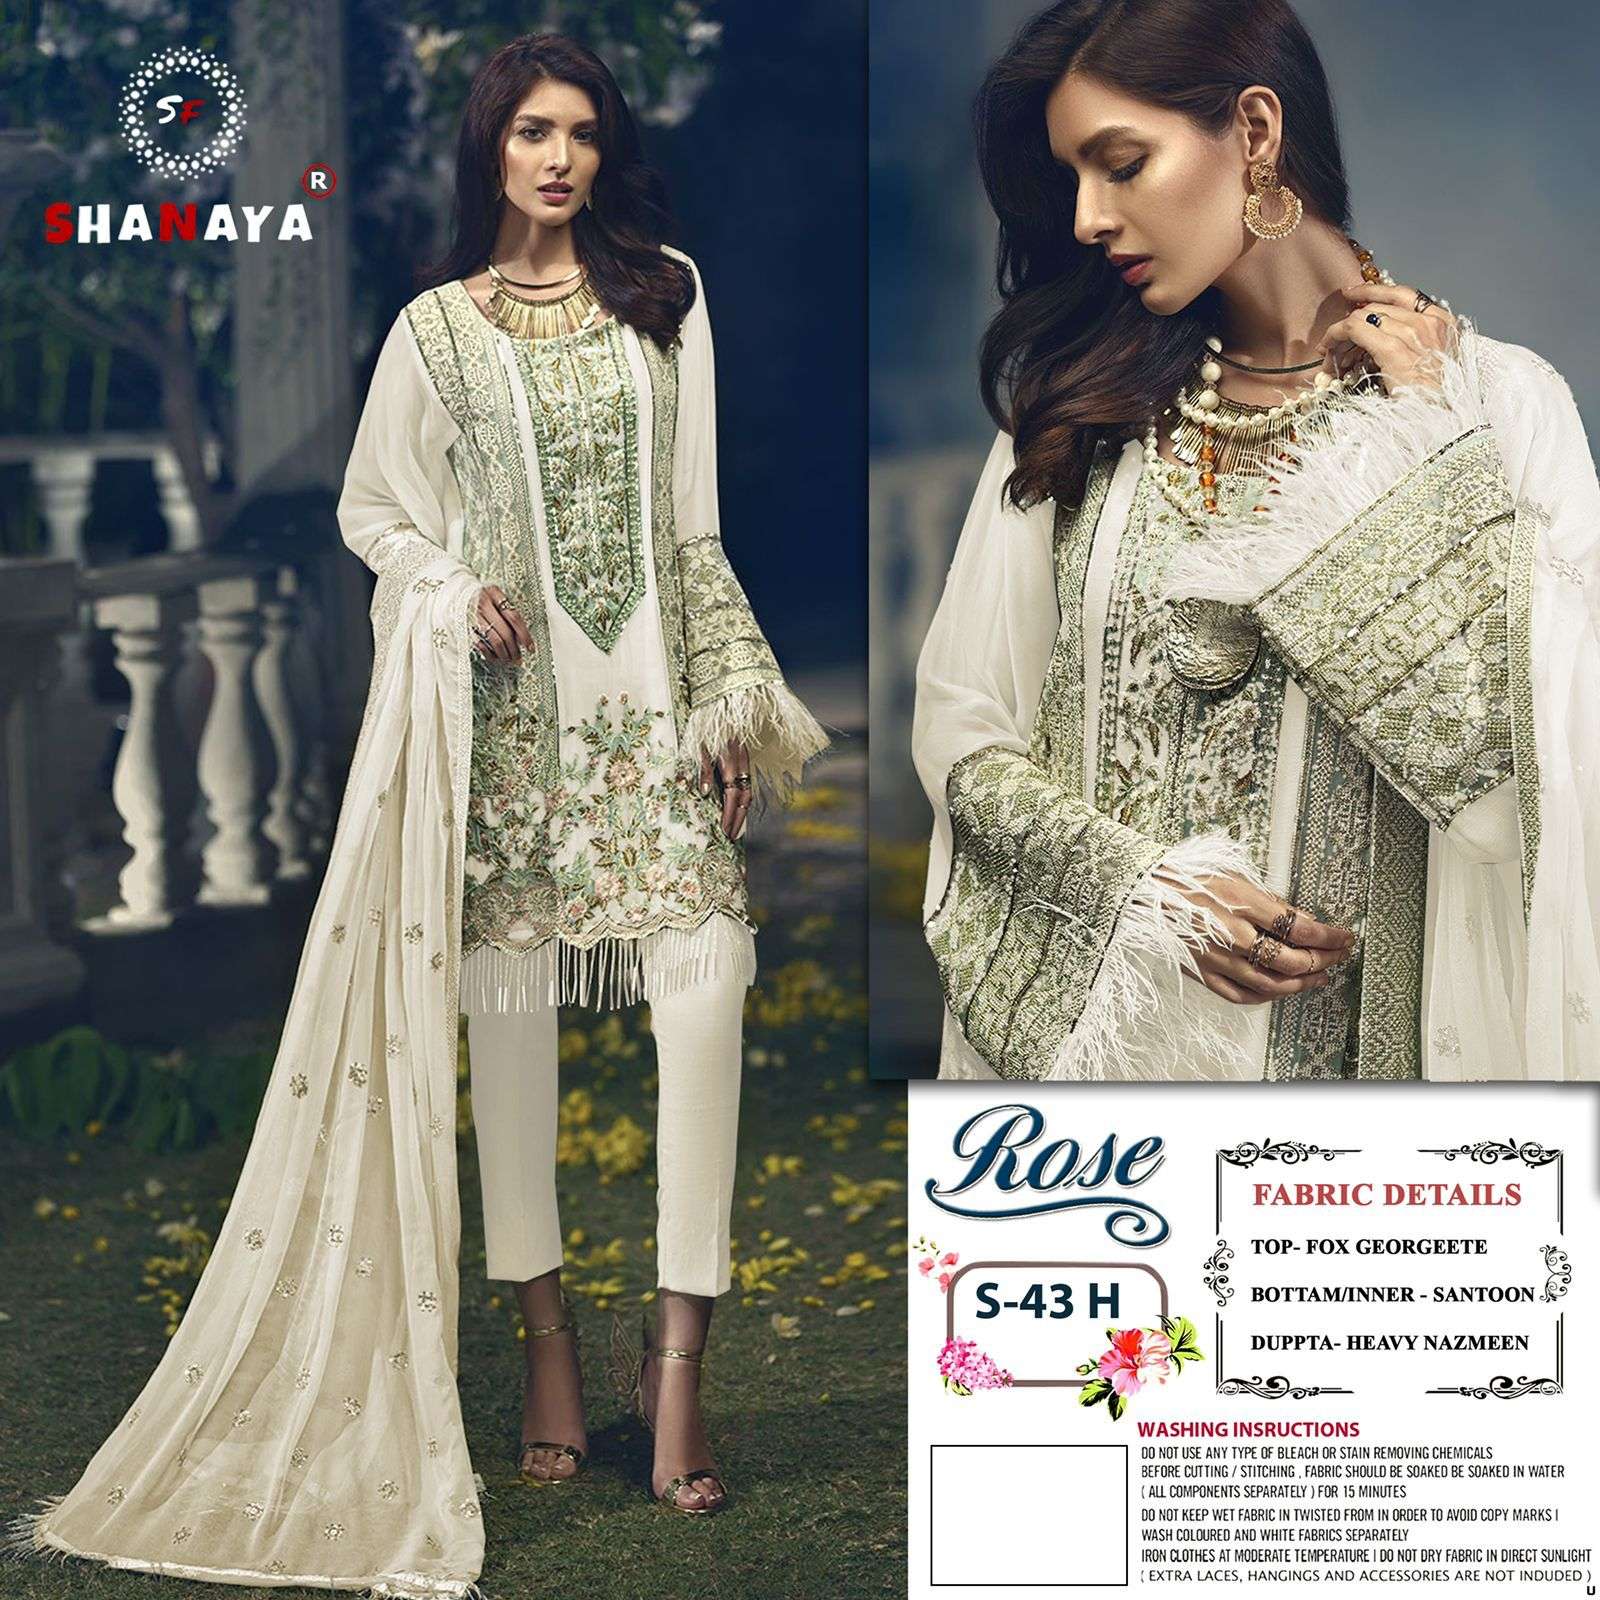 Rose S-43 Vol 3 By Shanaya Fashion Pakistani Dresses